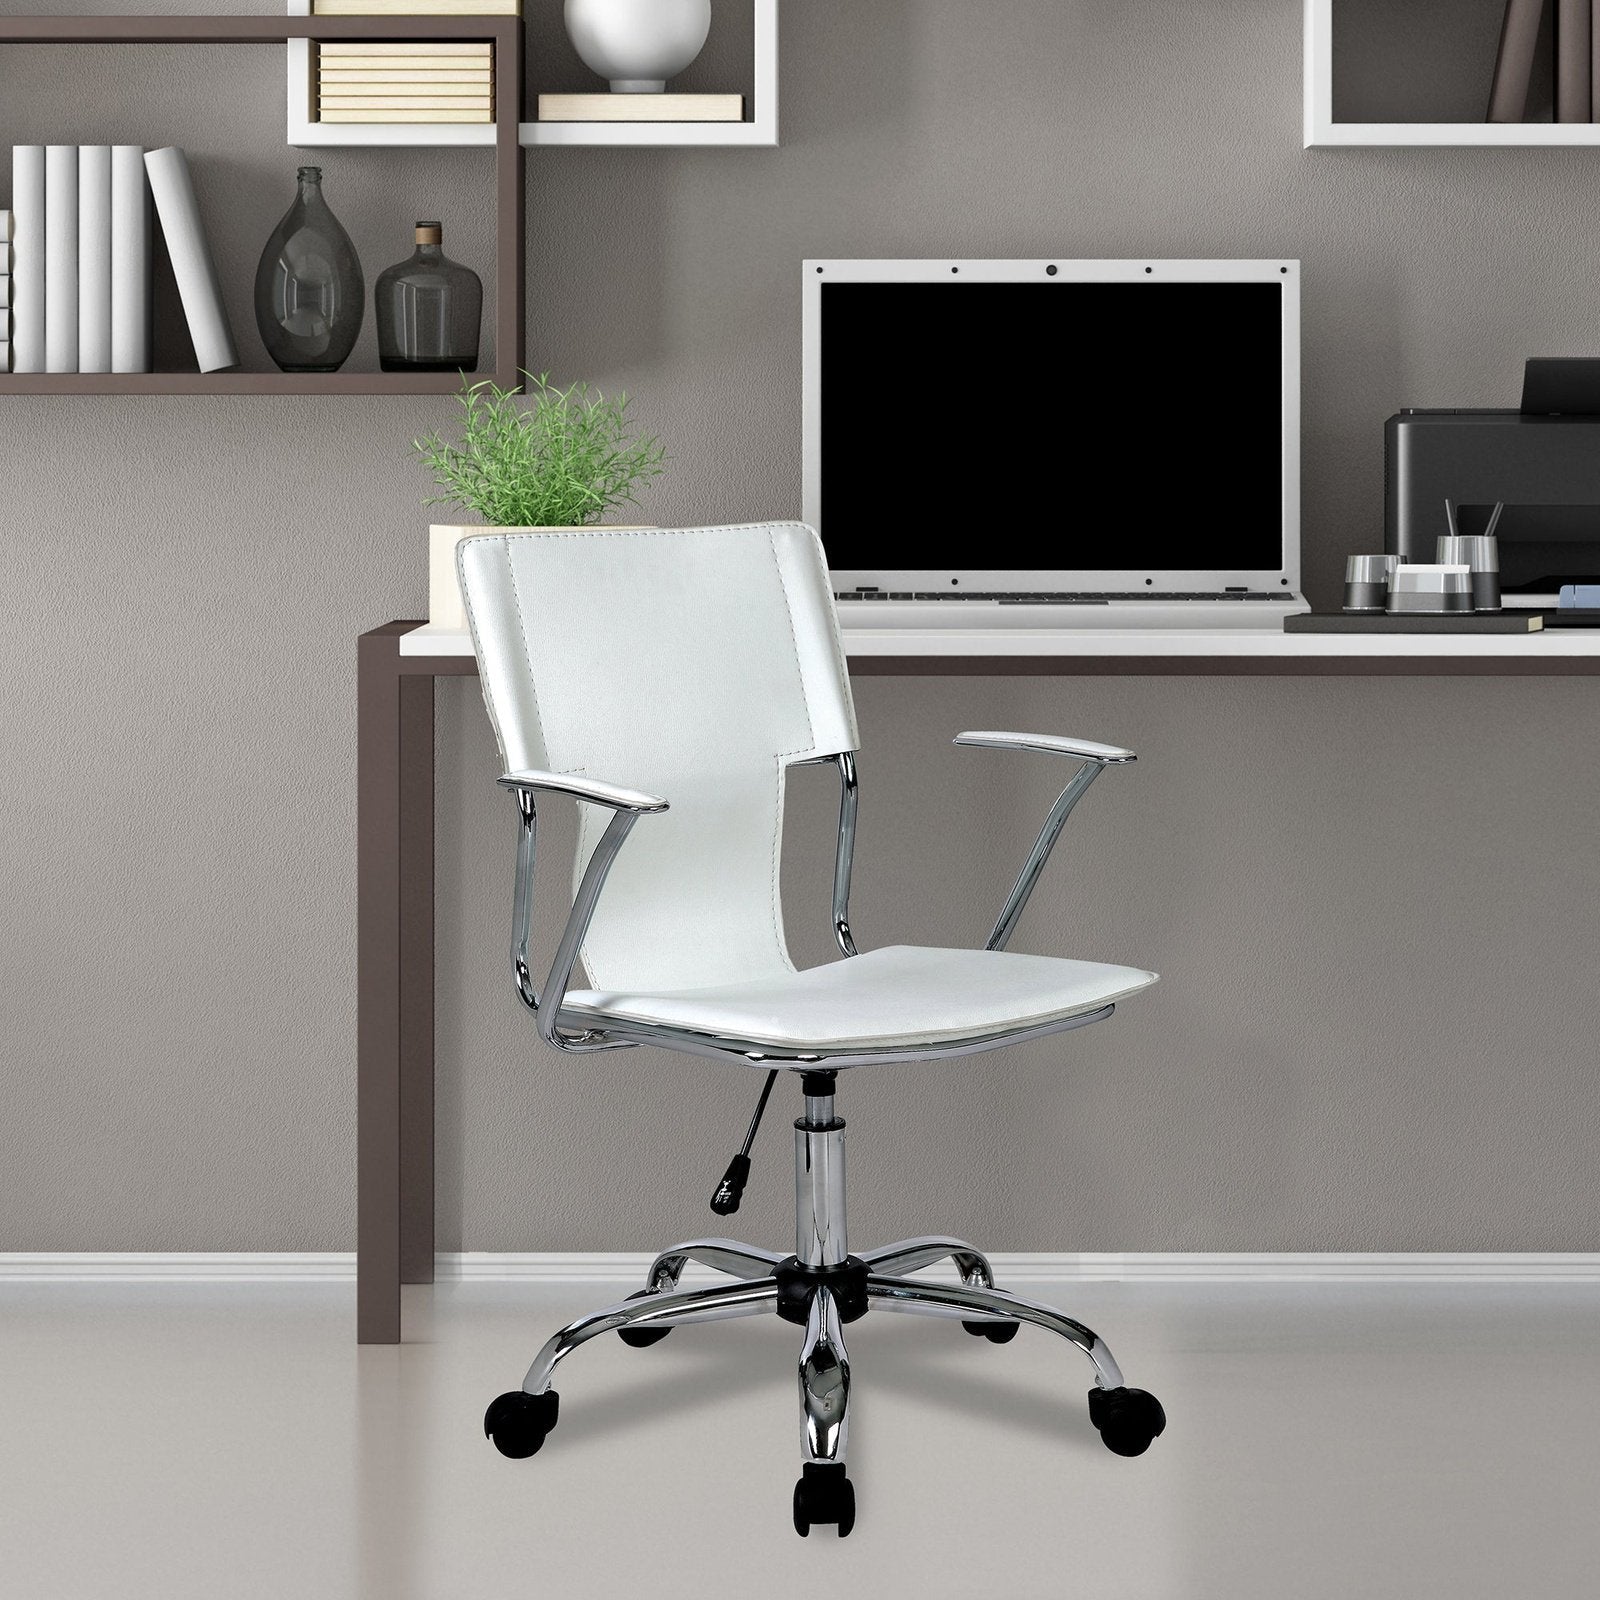 Designer Slimline Armchair with Tubular Chrome Frame - Office Products Online